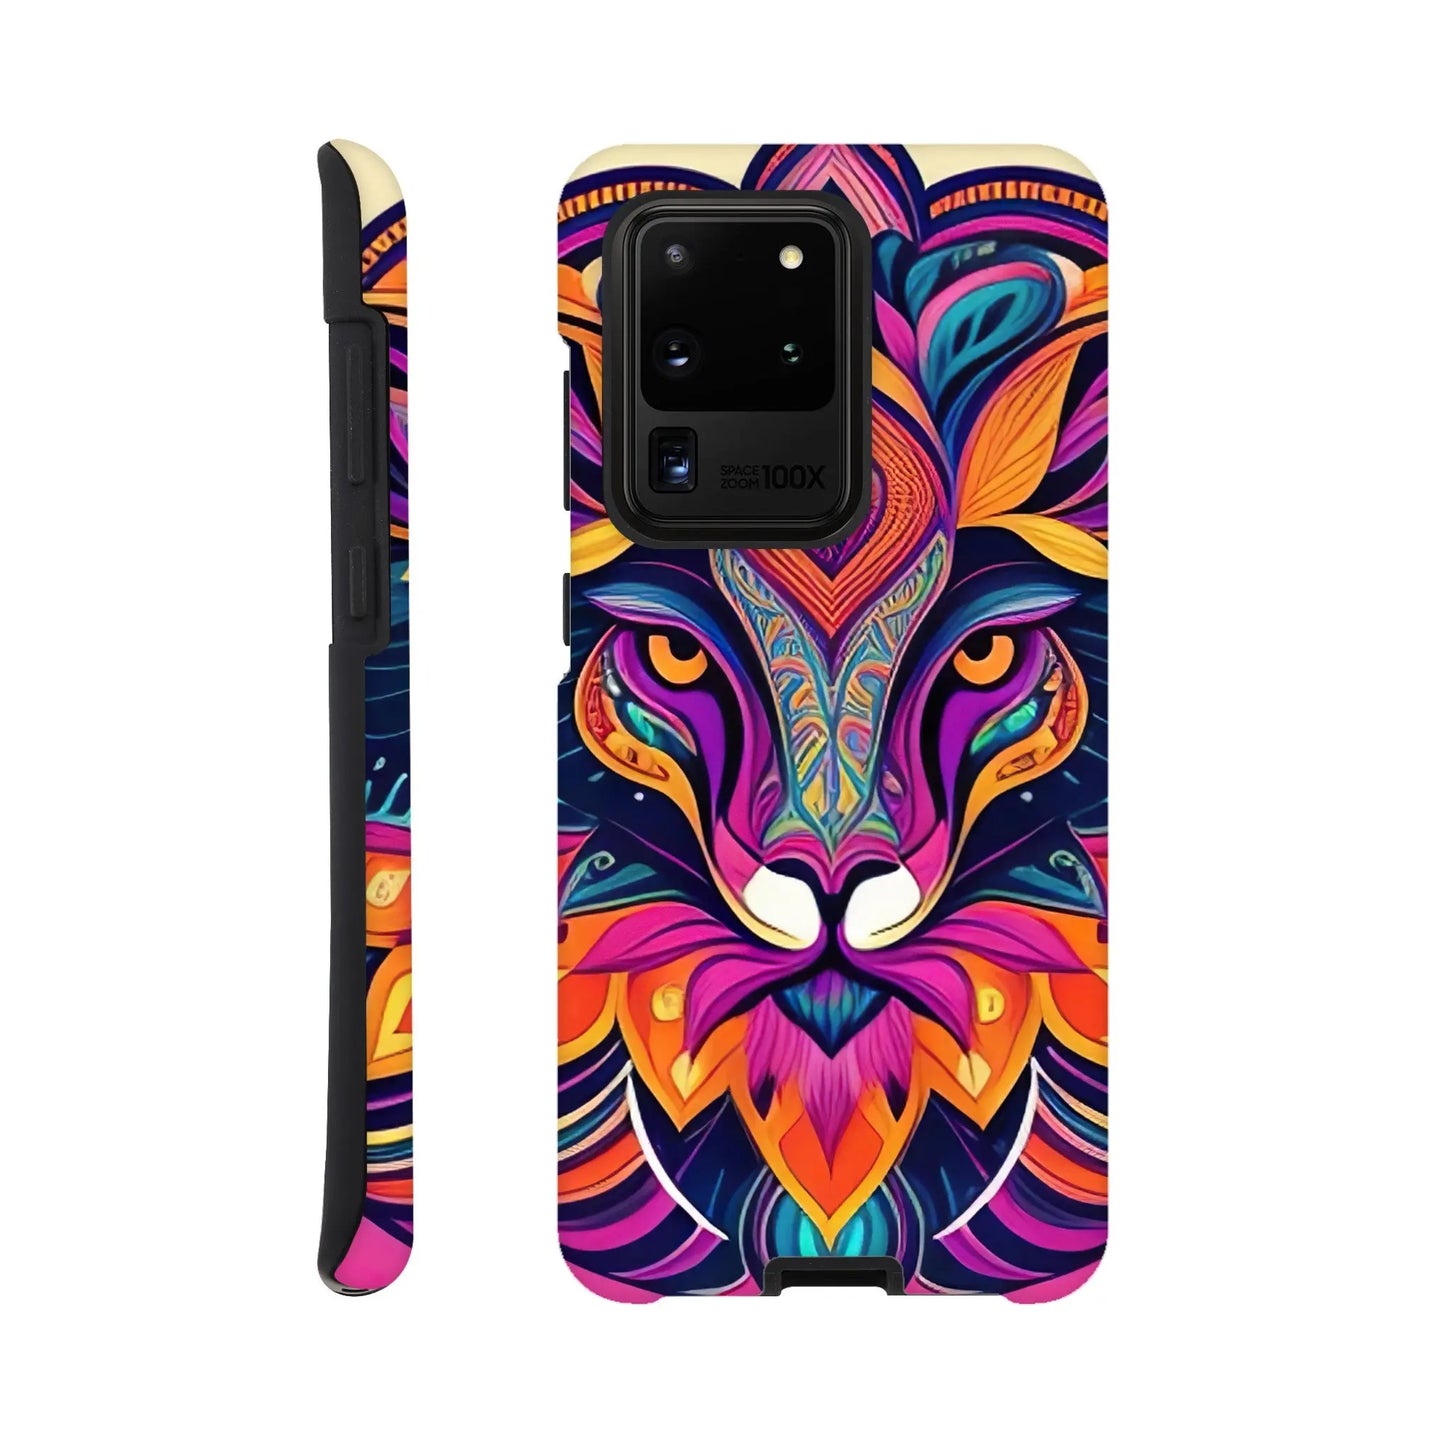 Smartphone-Hülle "Hart" - Löwenenergie - Digitaler Stil, KI-Kunst, Kreative Vielfalt, Galaxy-S20-Ultra - RolConArt